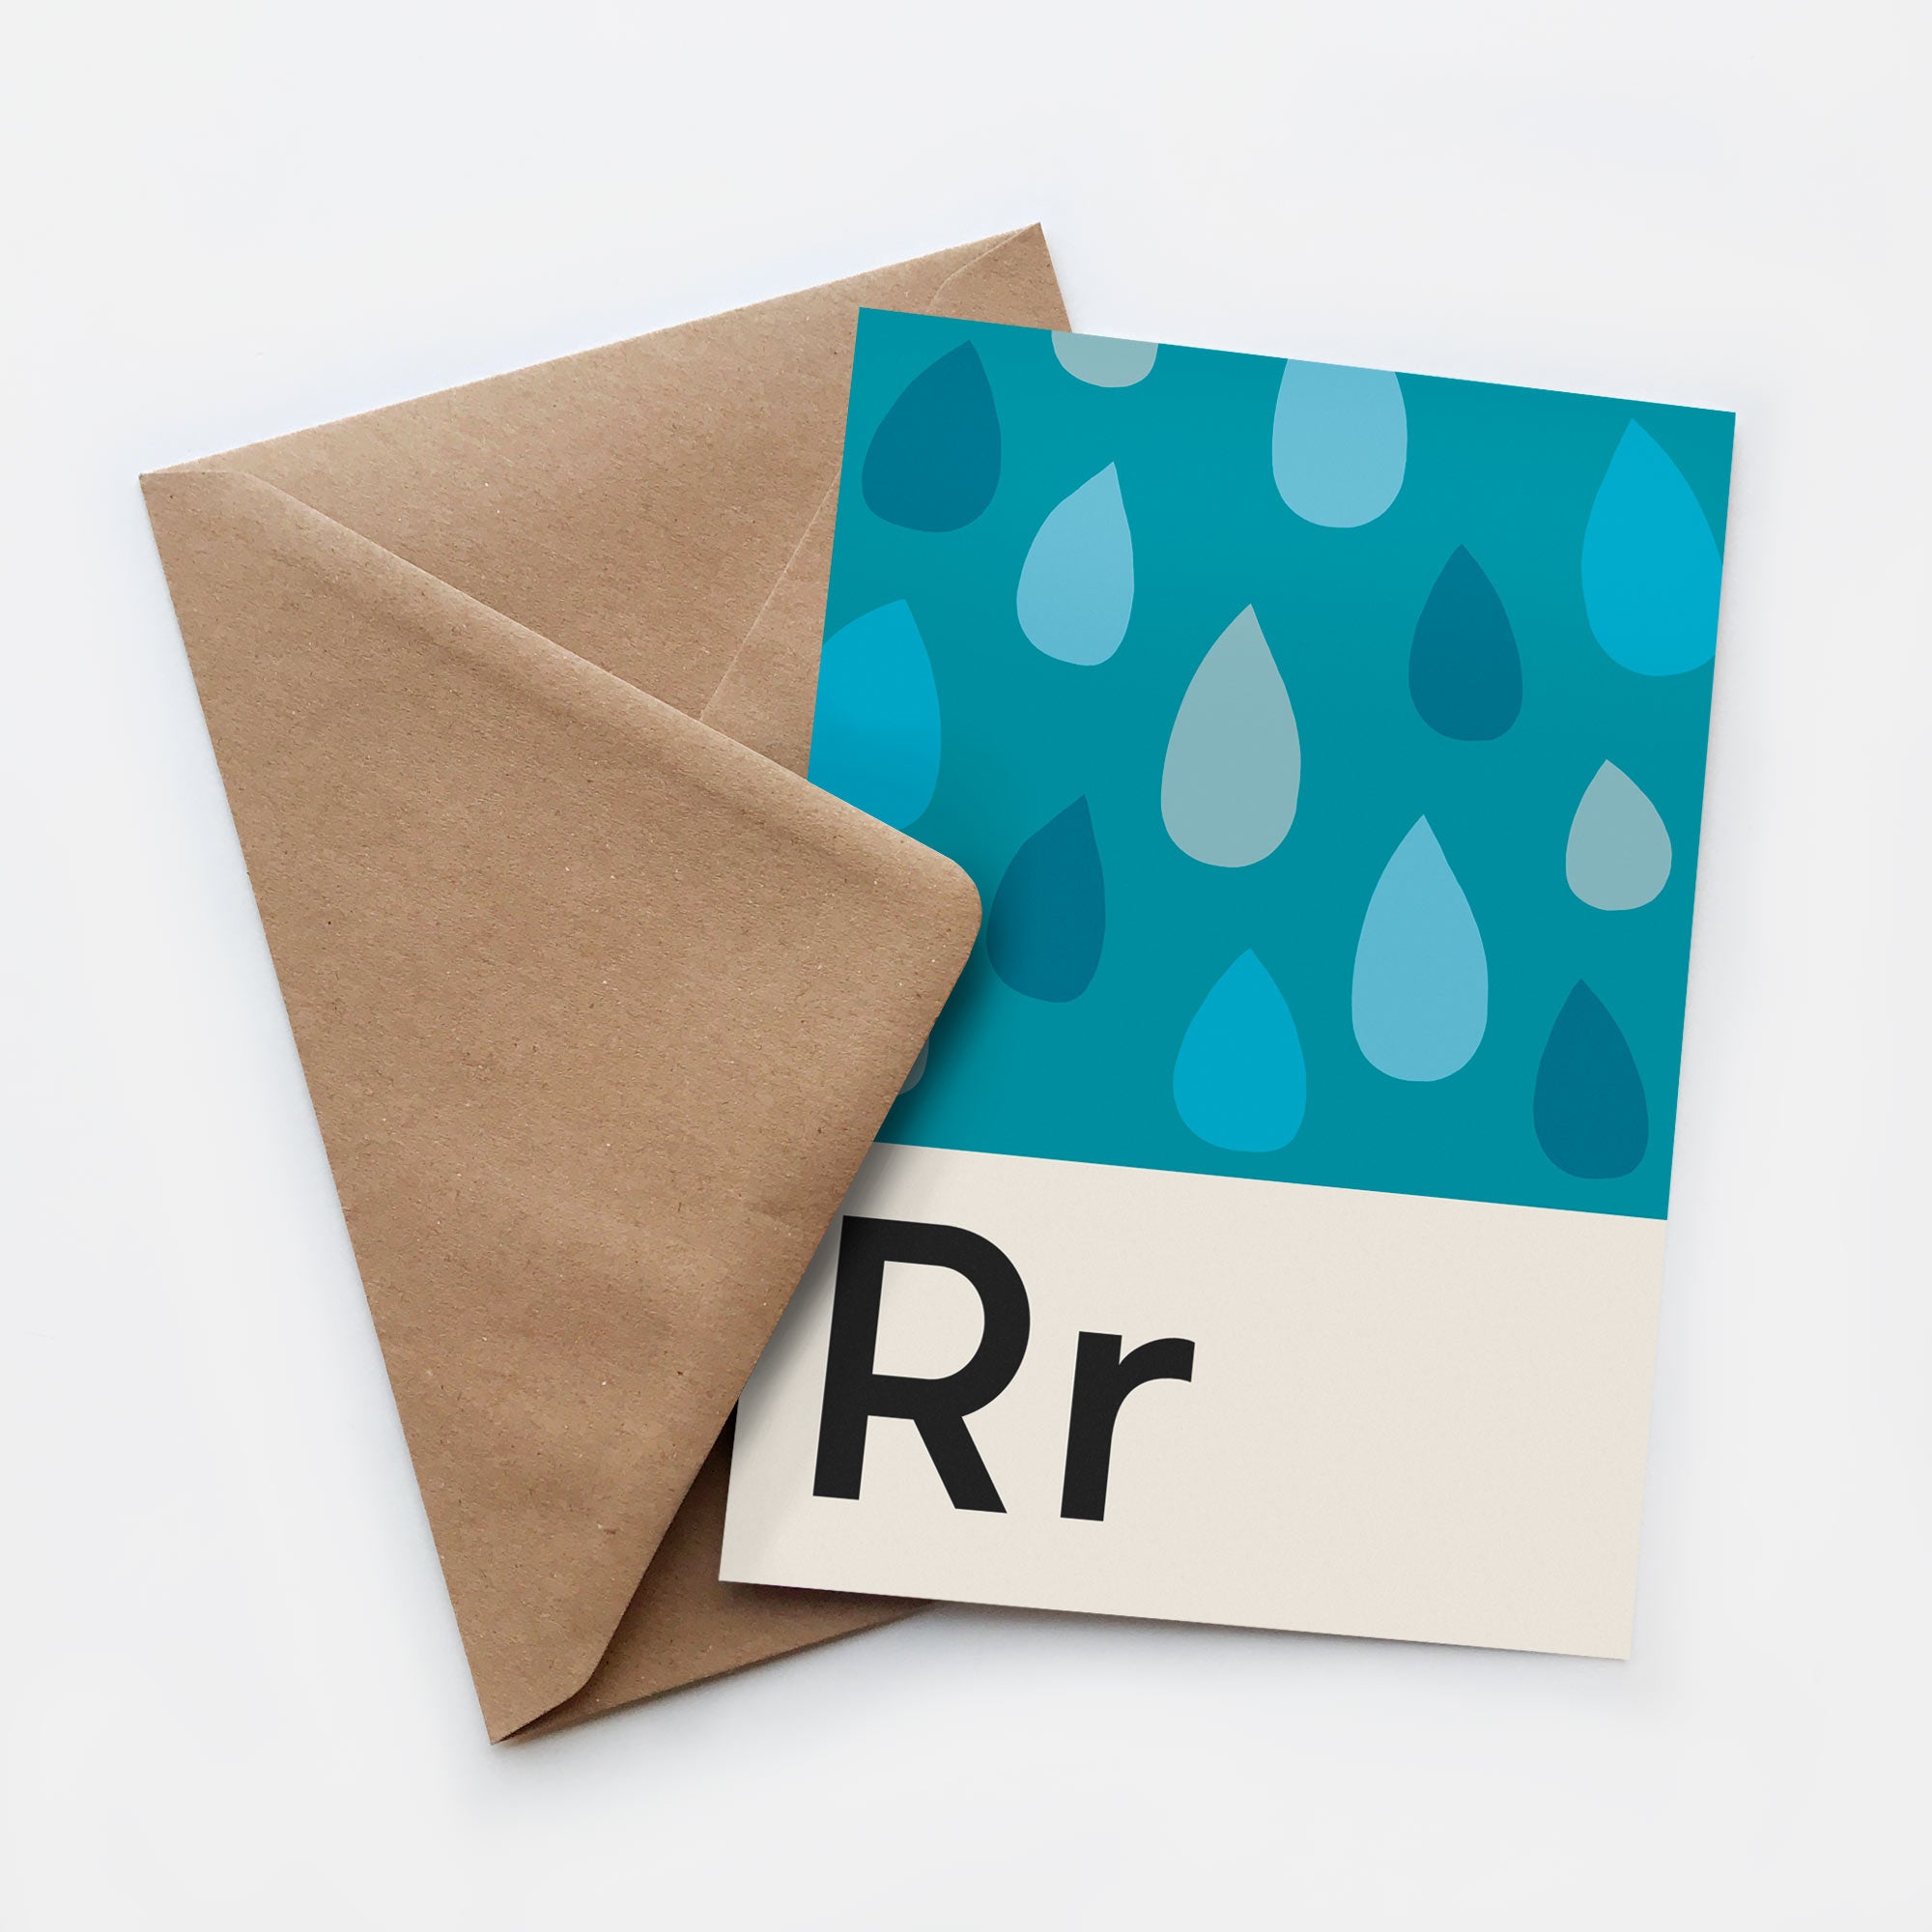 Raindrops card